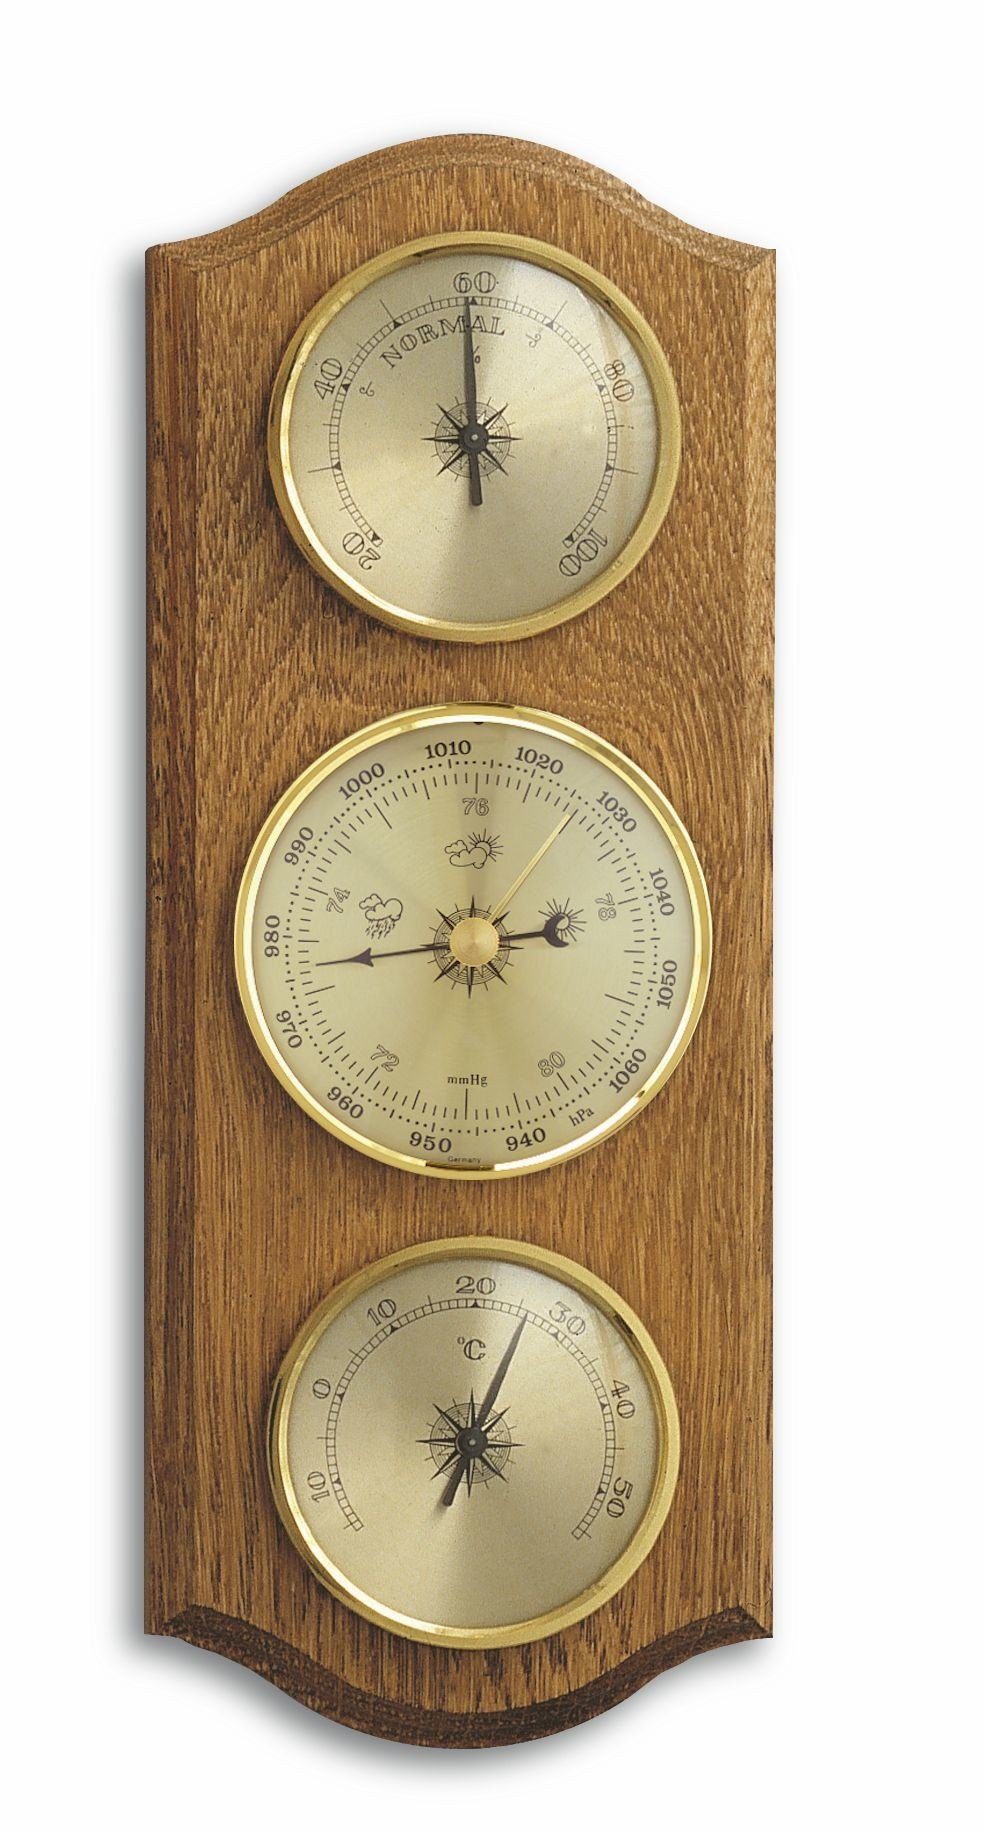 TFA Dostmann »TFA 20.1000 Analog aus Massivholz mit Thermometer Hygrometer  Barometer« Wetterstation online kaufen | OTTO